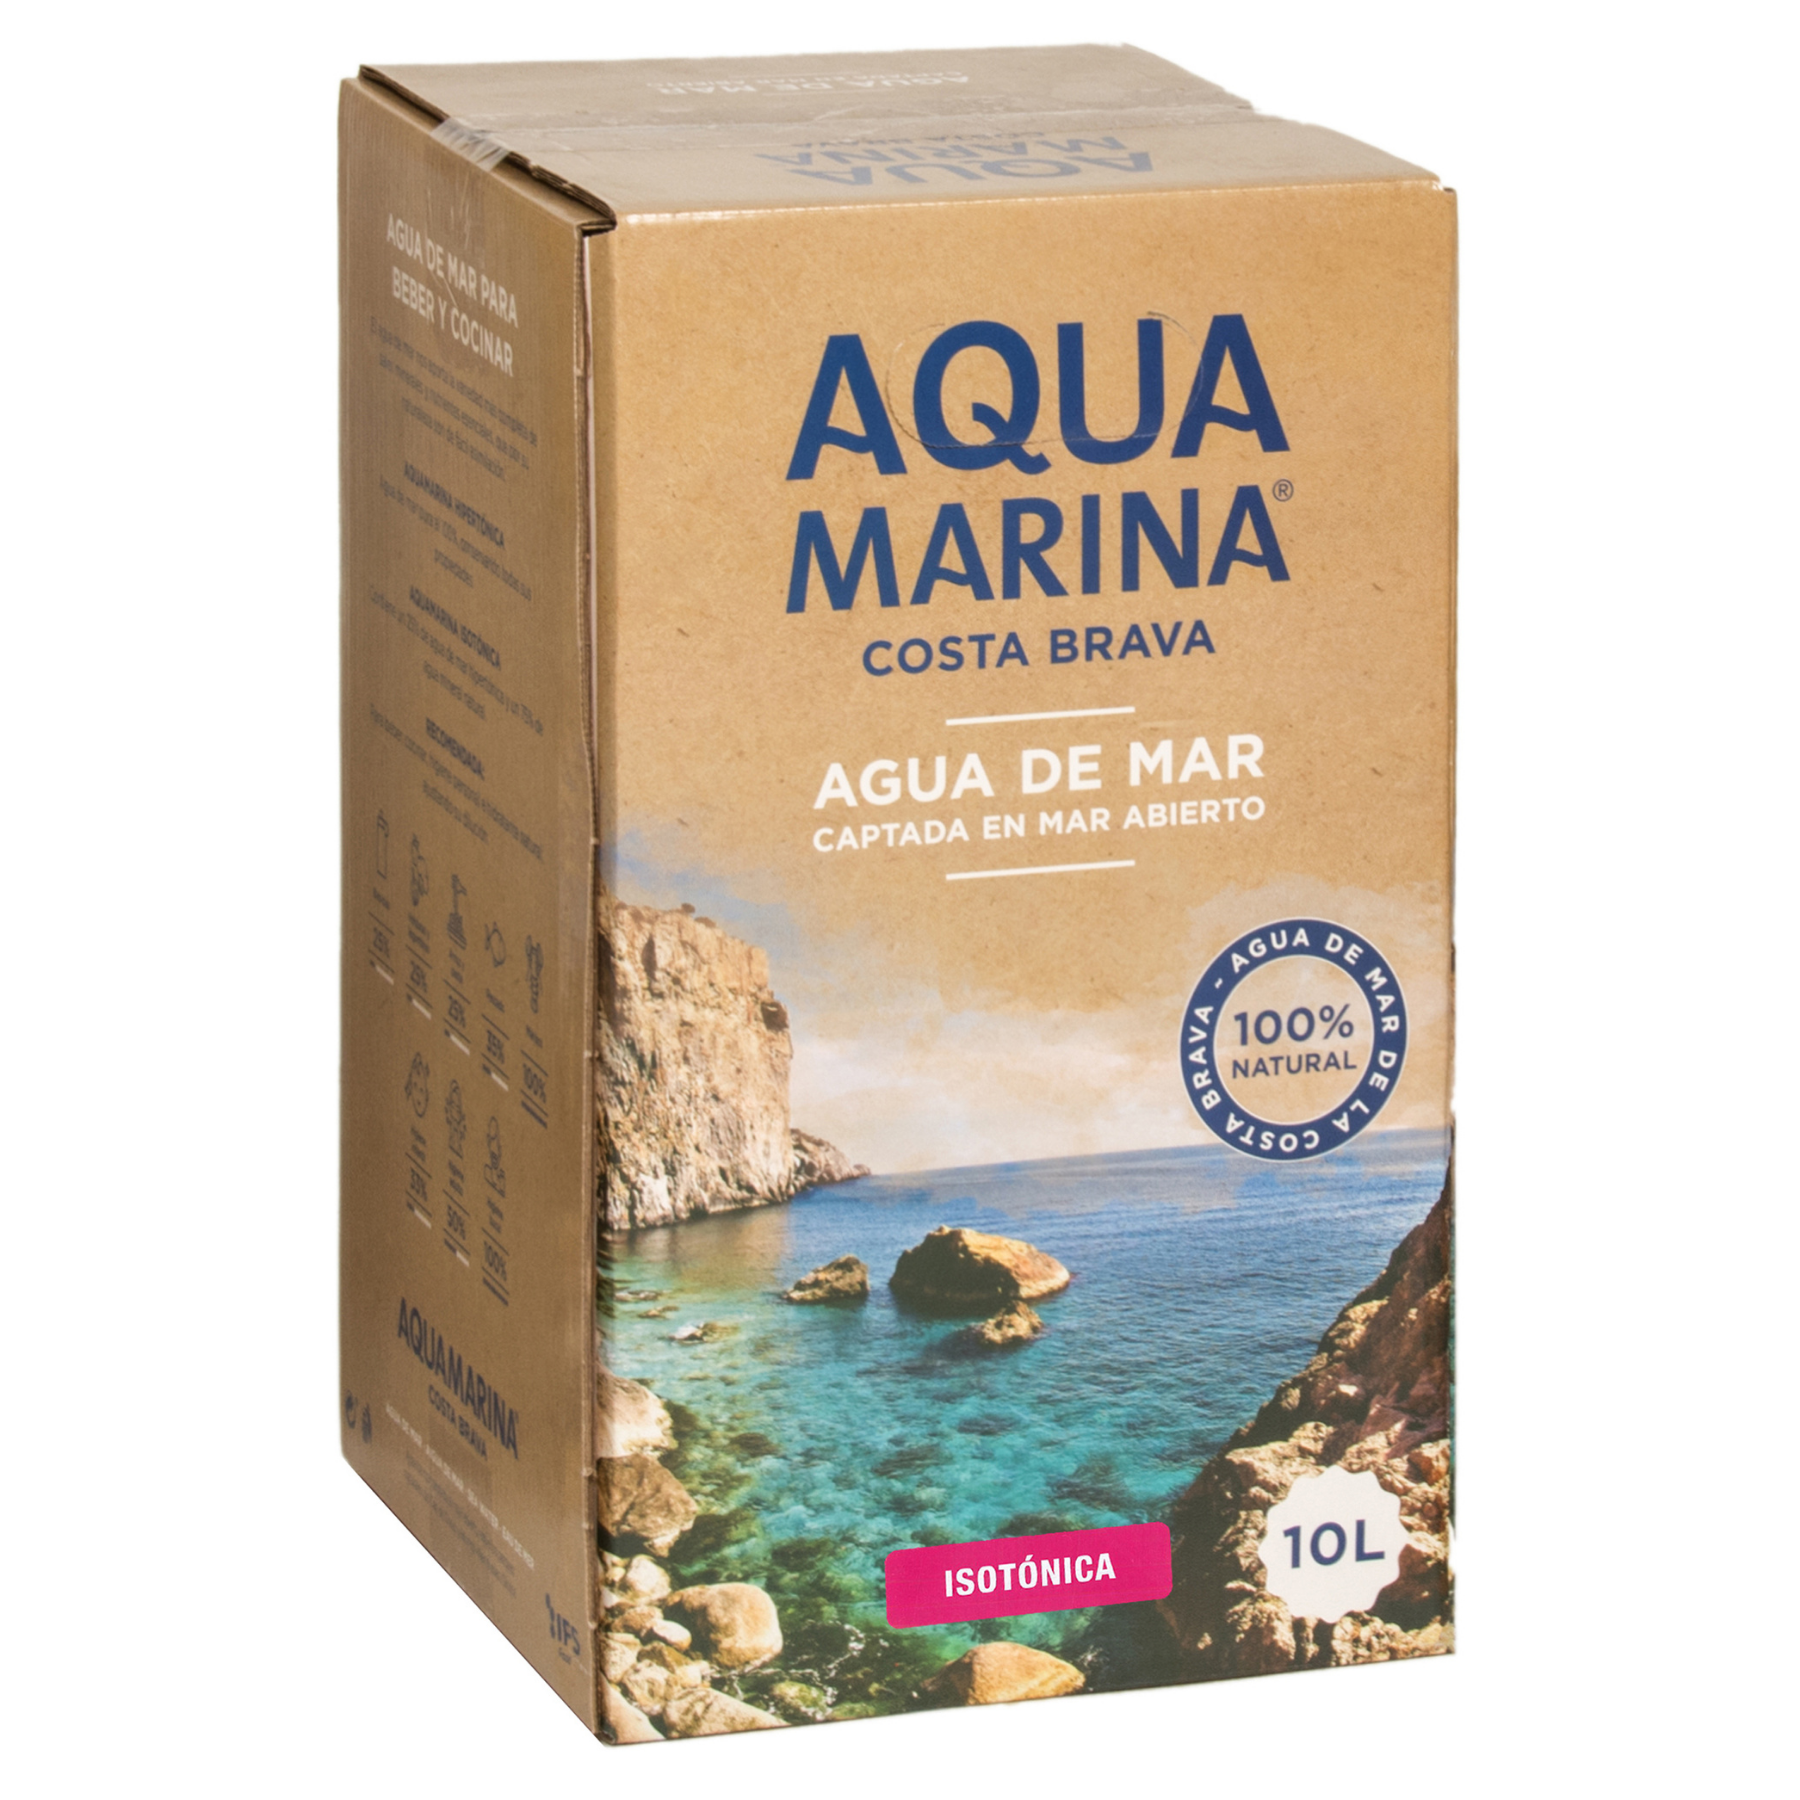 AQUAMARINA Costa Brava. Agua marina Isotónica 10 Litros Bag In Box. Microfiltrada, sin aditivos. Aporta 75 minerales y oligoelementos.